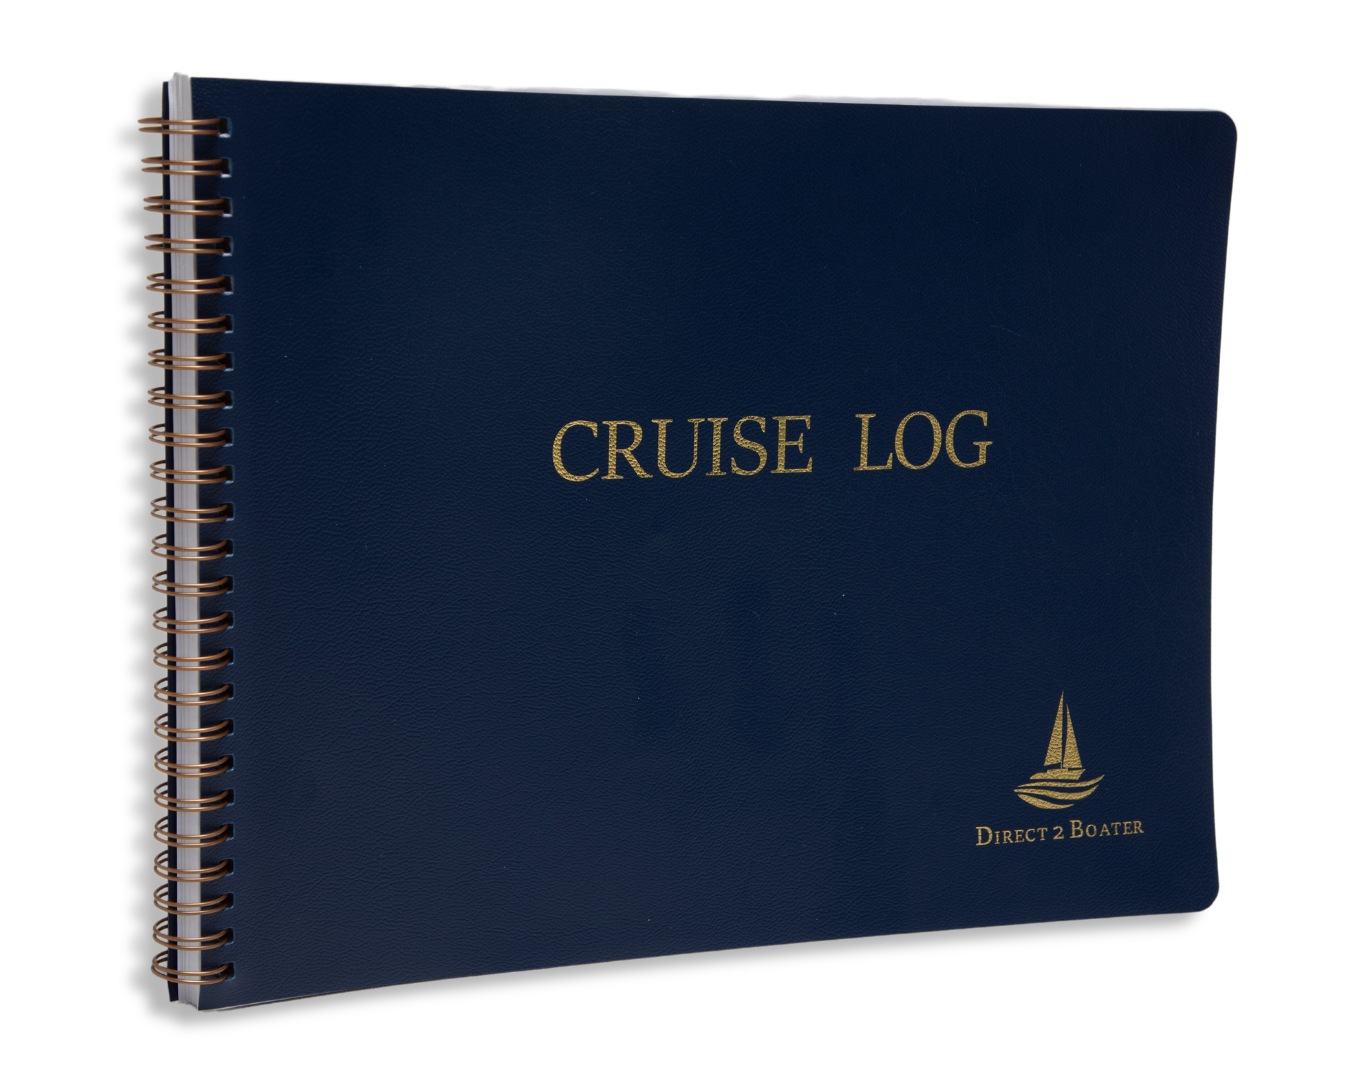 Direct 2 Boater Cruise Log & Maintenance Log - Soft Bound (2 Items)